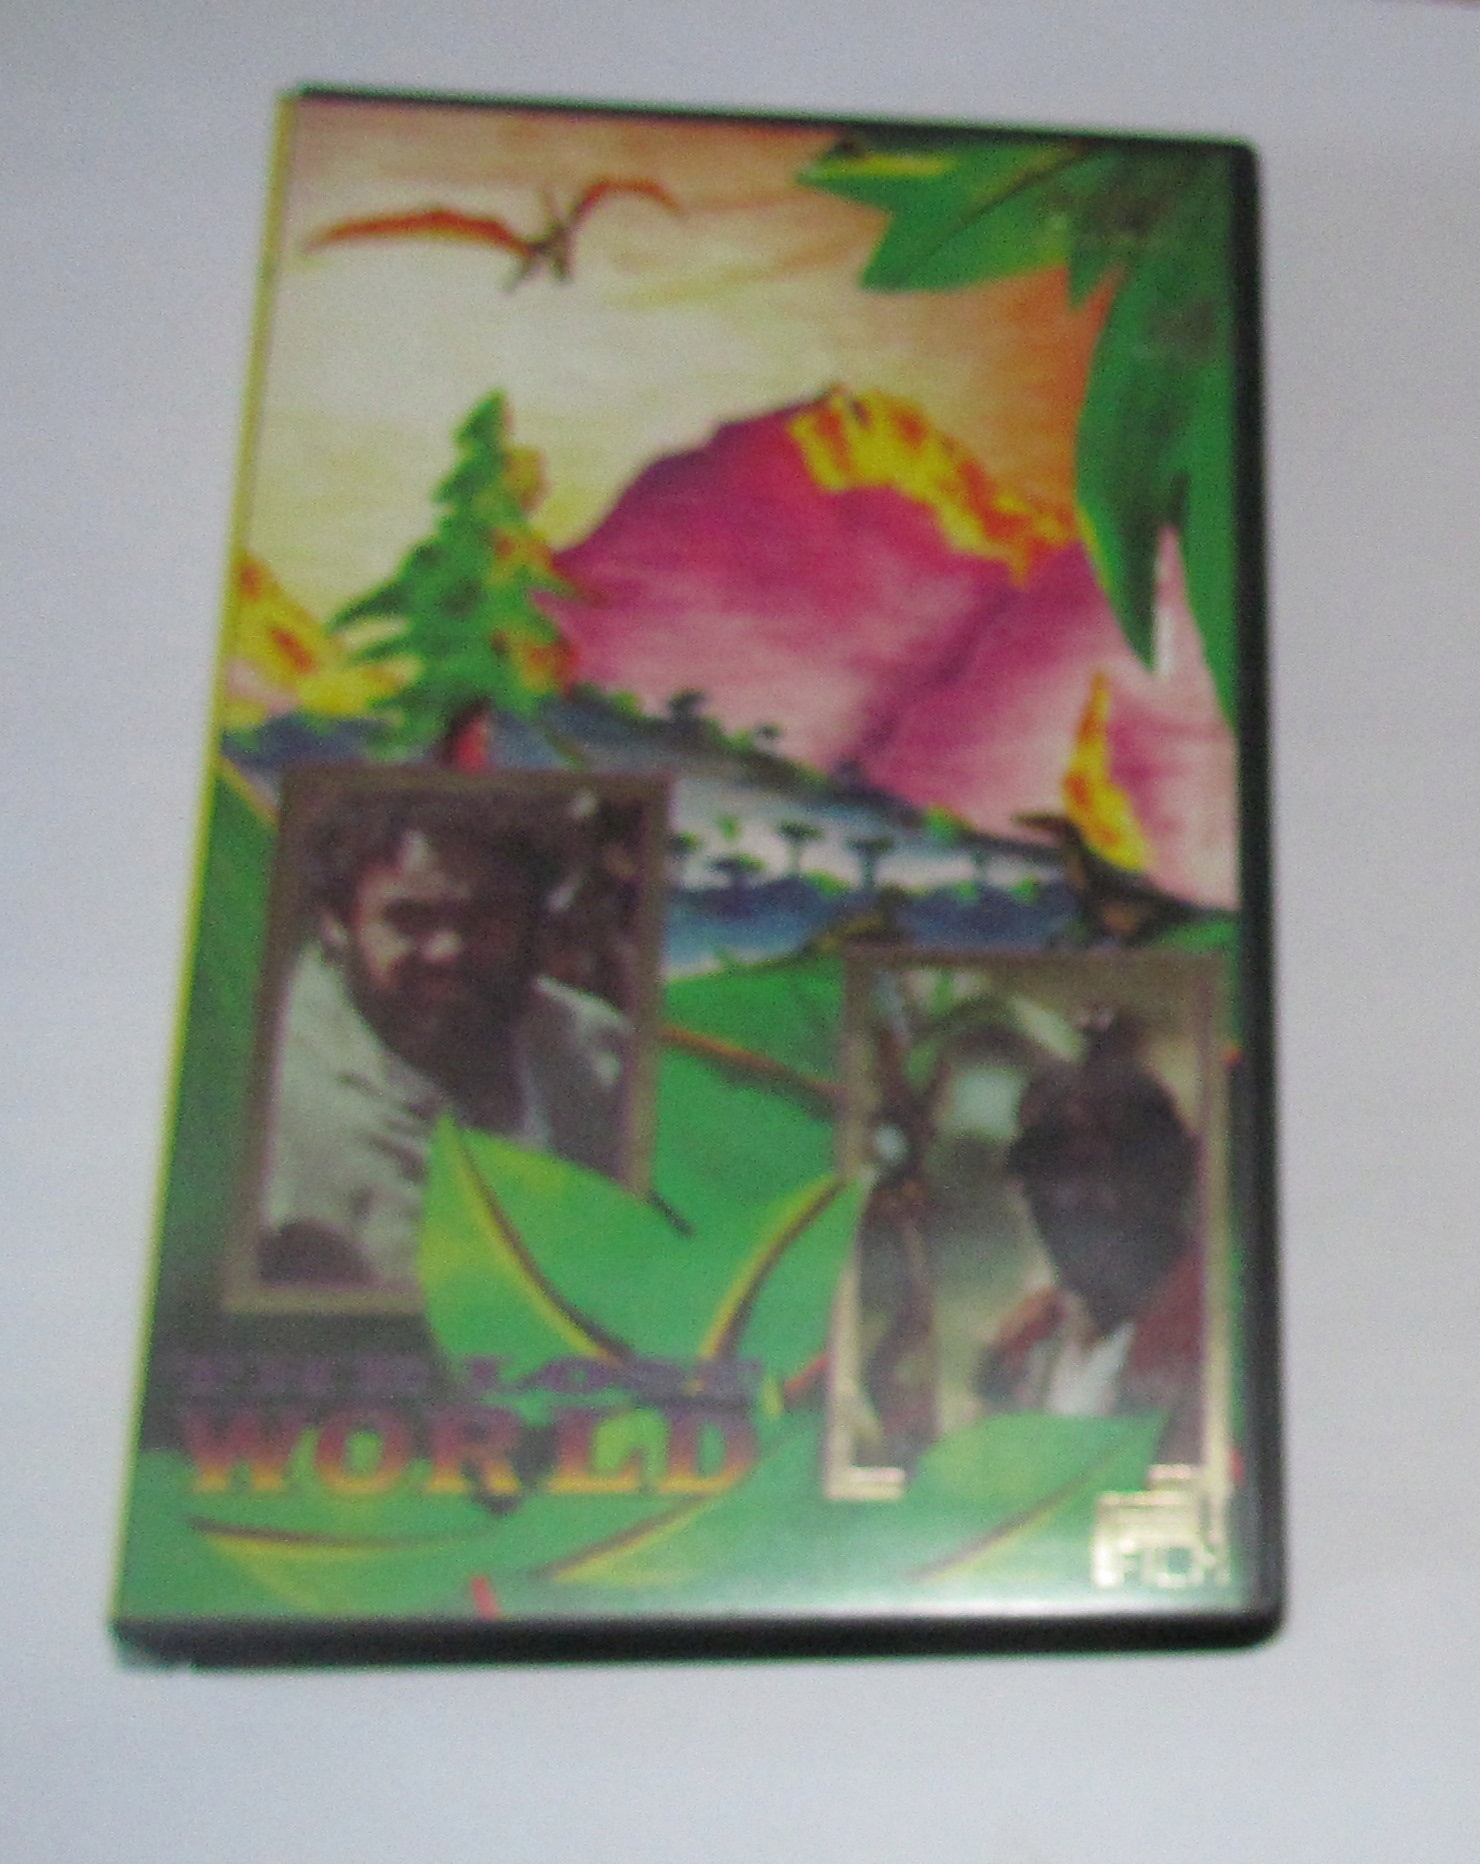 The lost world John Rhys-Davies PAI FILM GOLD VHS